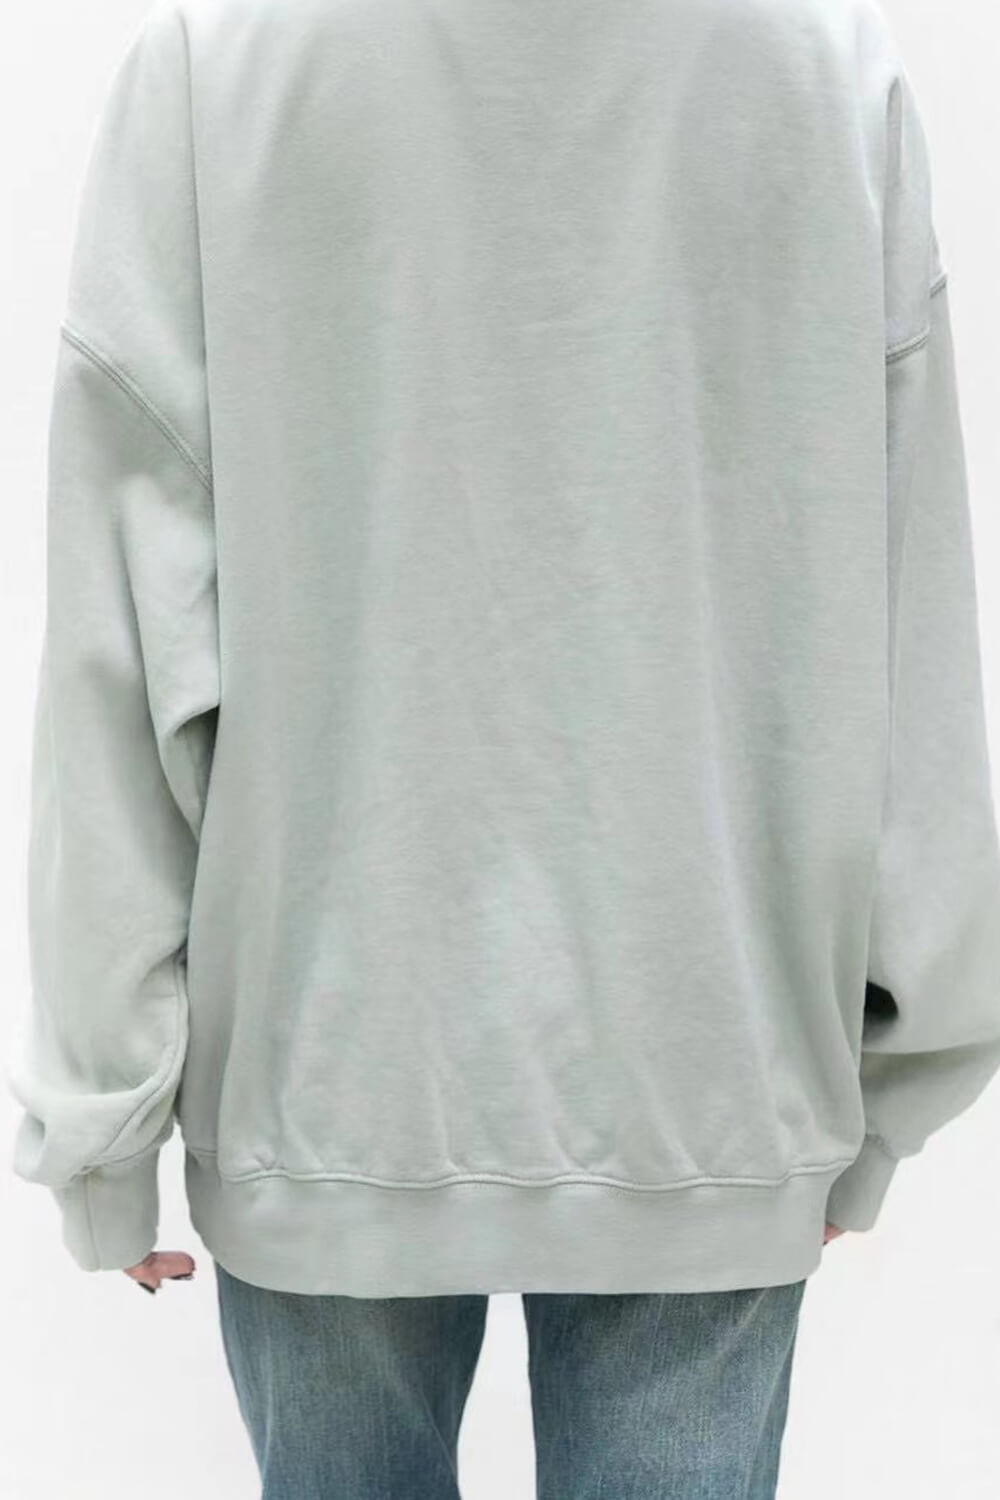 New York' Pullover Oversized Sweatshirt - Sage Green/White